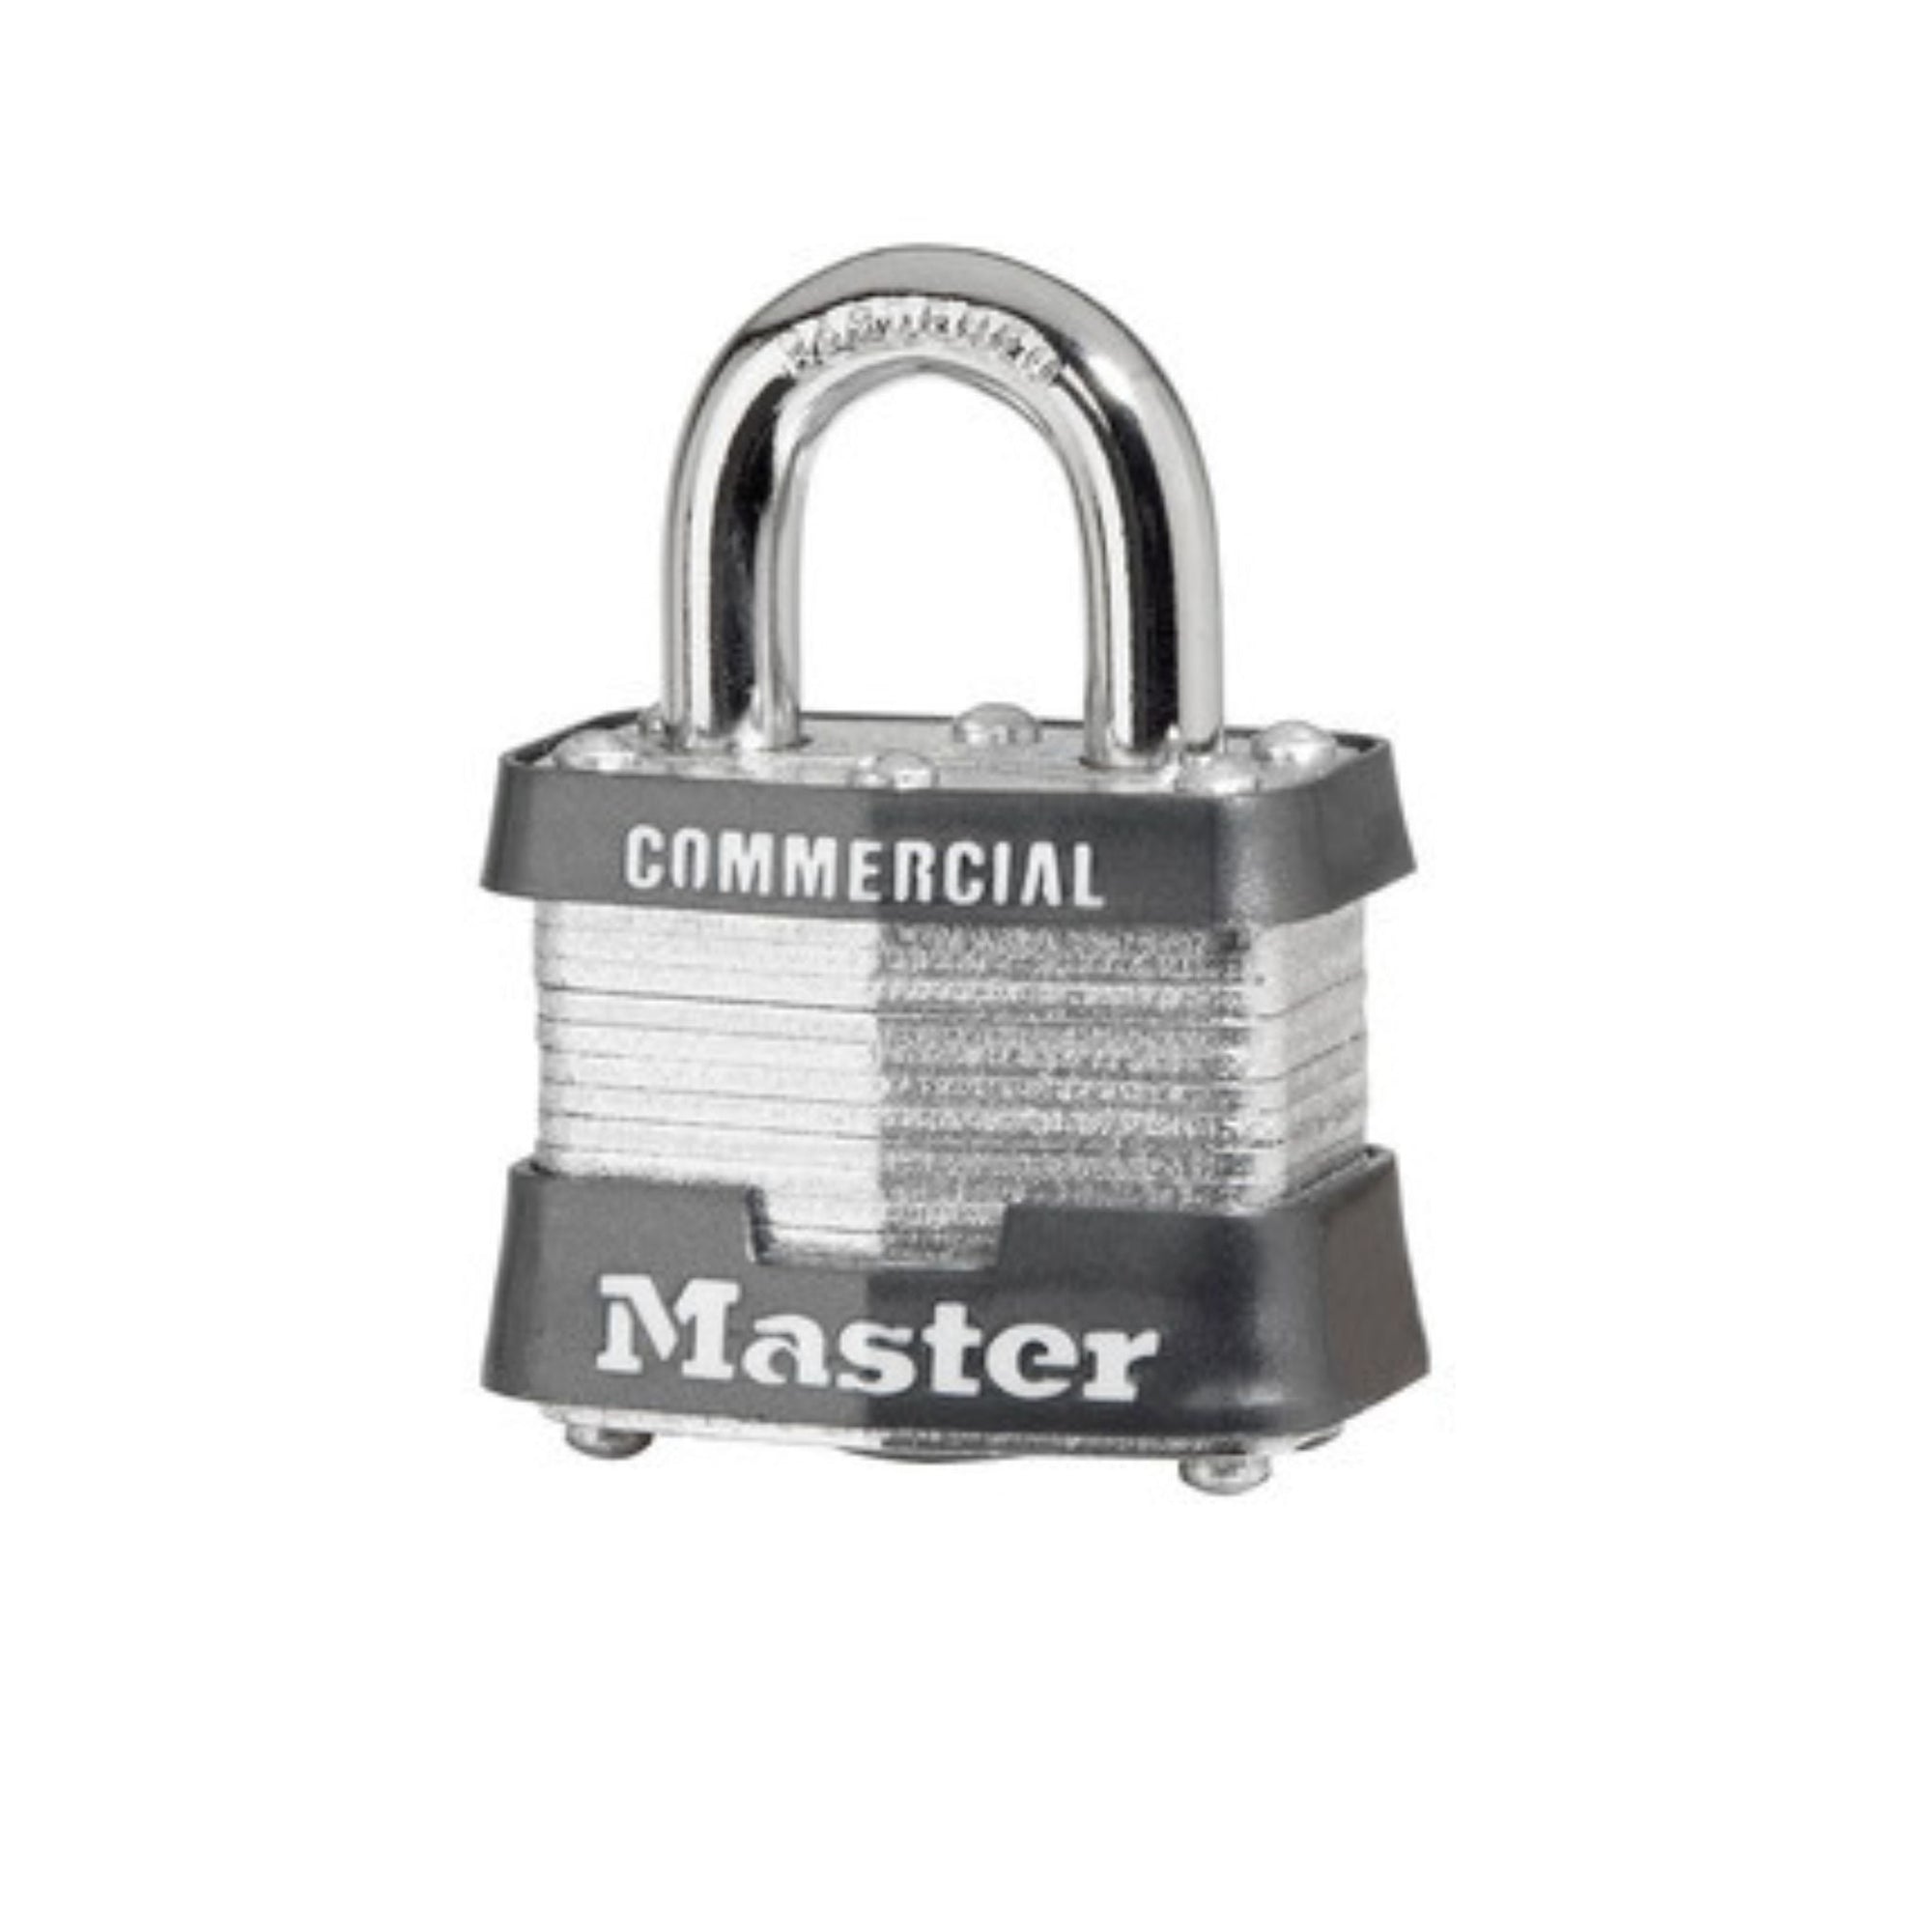 Master Lock 3KA 0317 Lock Laminated steel No. 3 Series Padlock Keyed to Match Existing Key Number KA0317 - The Lock Source